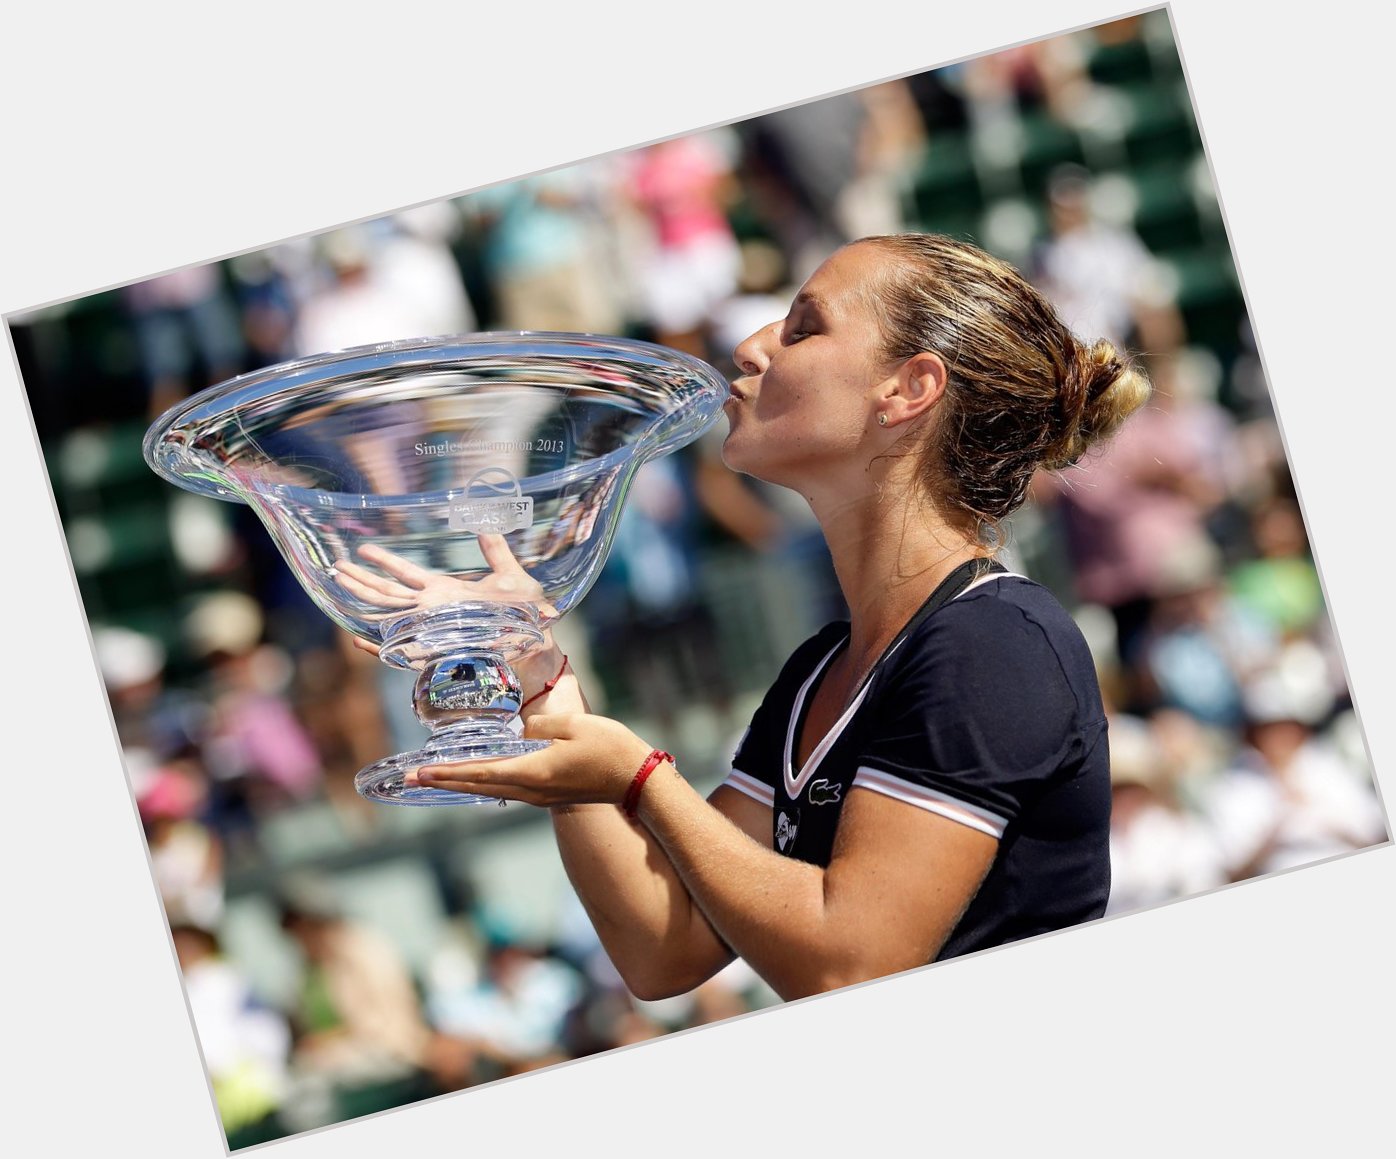 Happy Birthday to our 2013 champion, Dominika Cibulkova!  